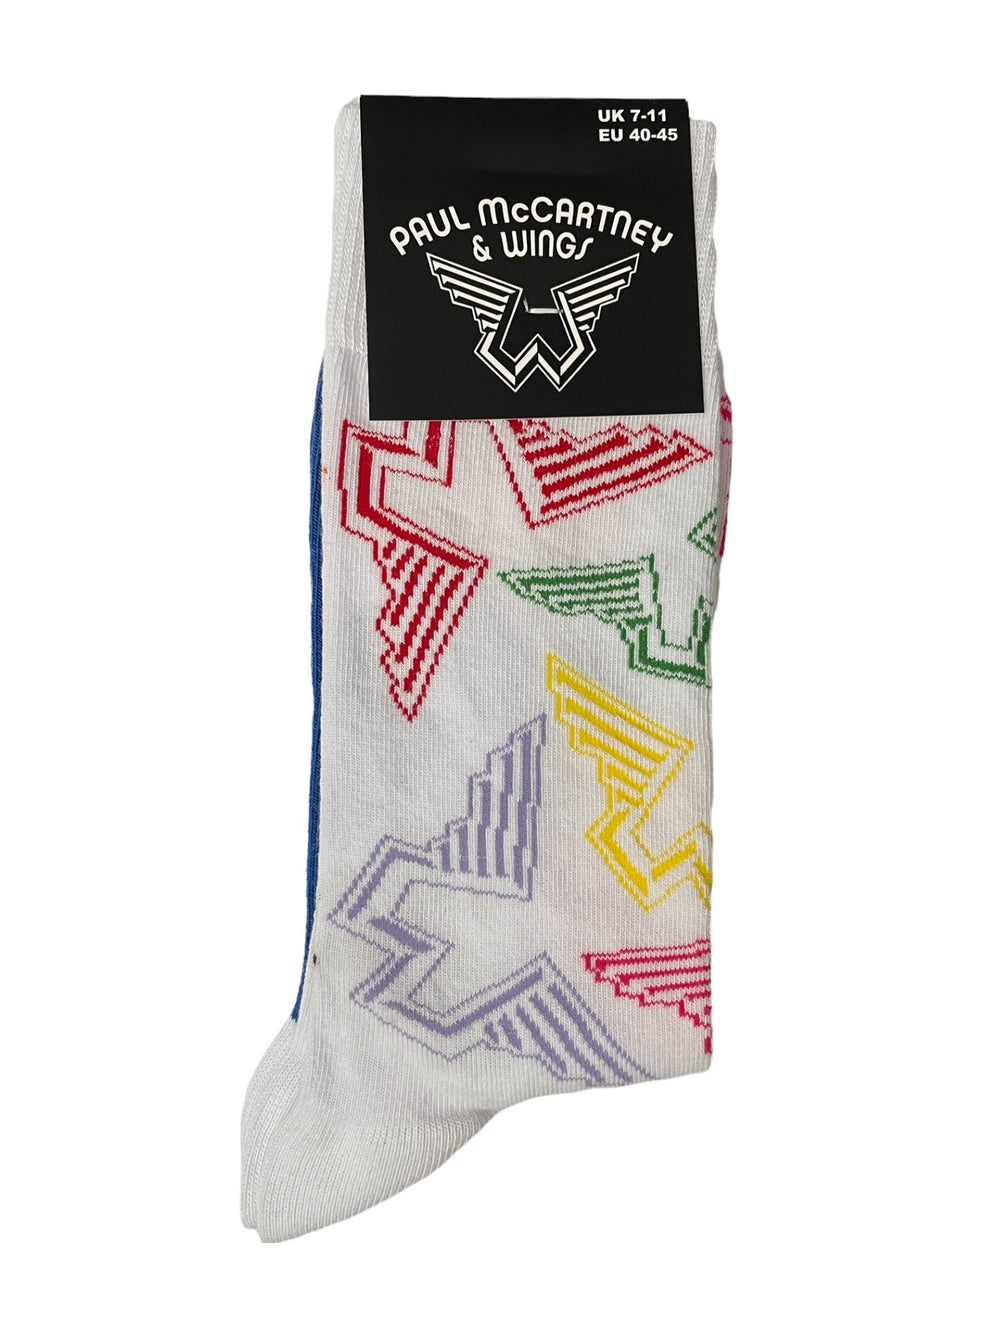 Paul McCartney & Wings White Official Product 1 Pair Jacquard Socks Size 7-11 UK